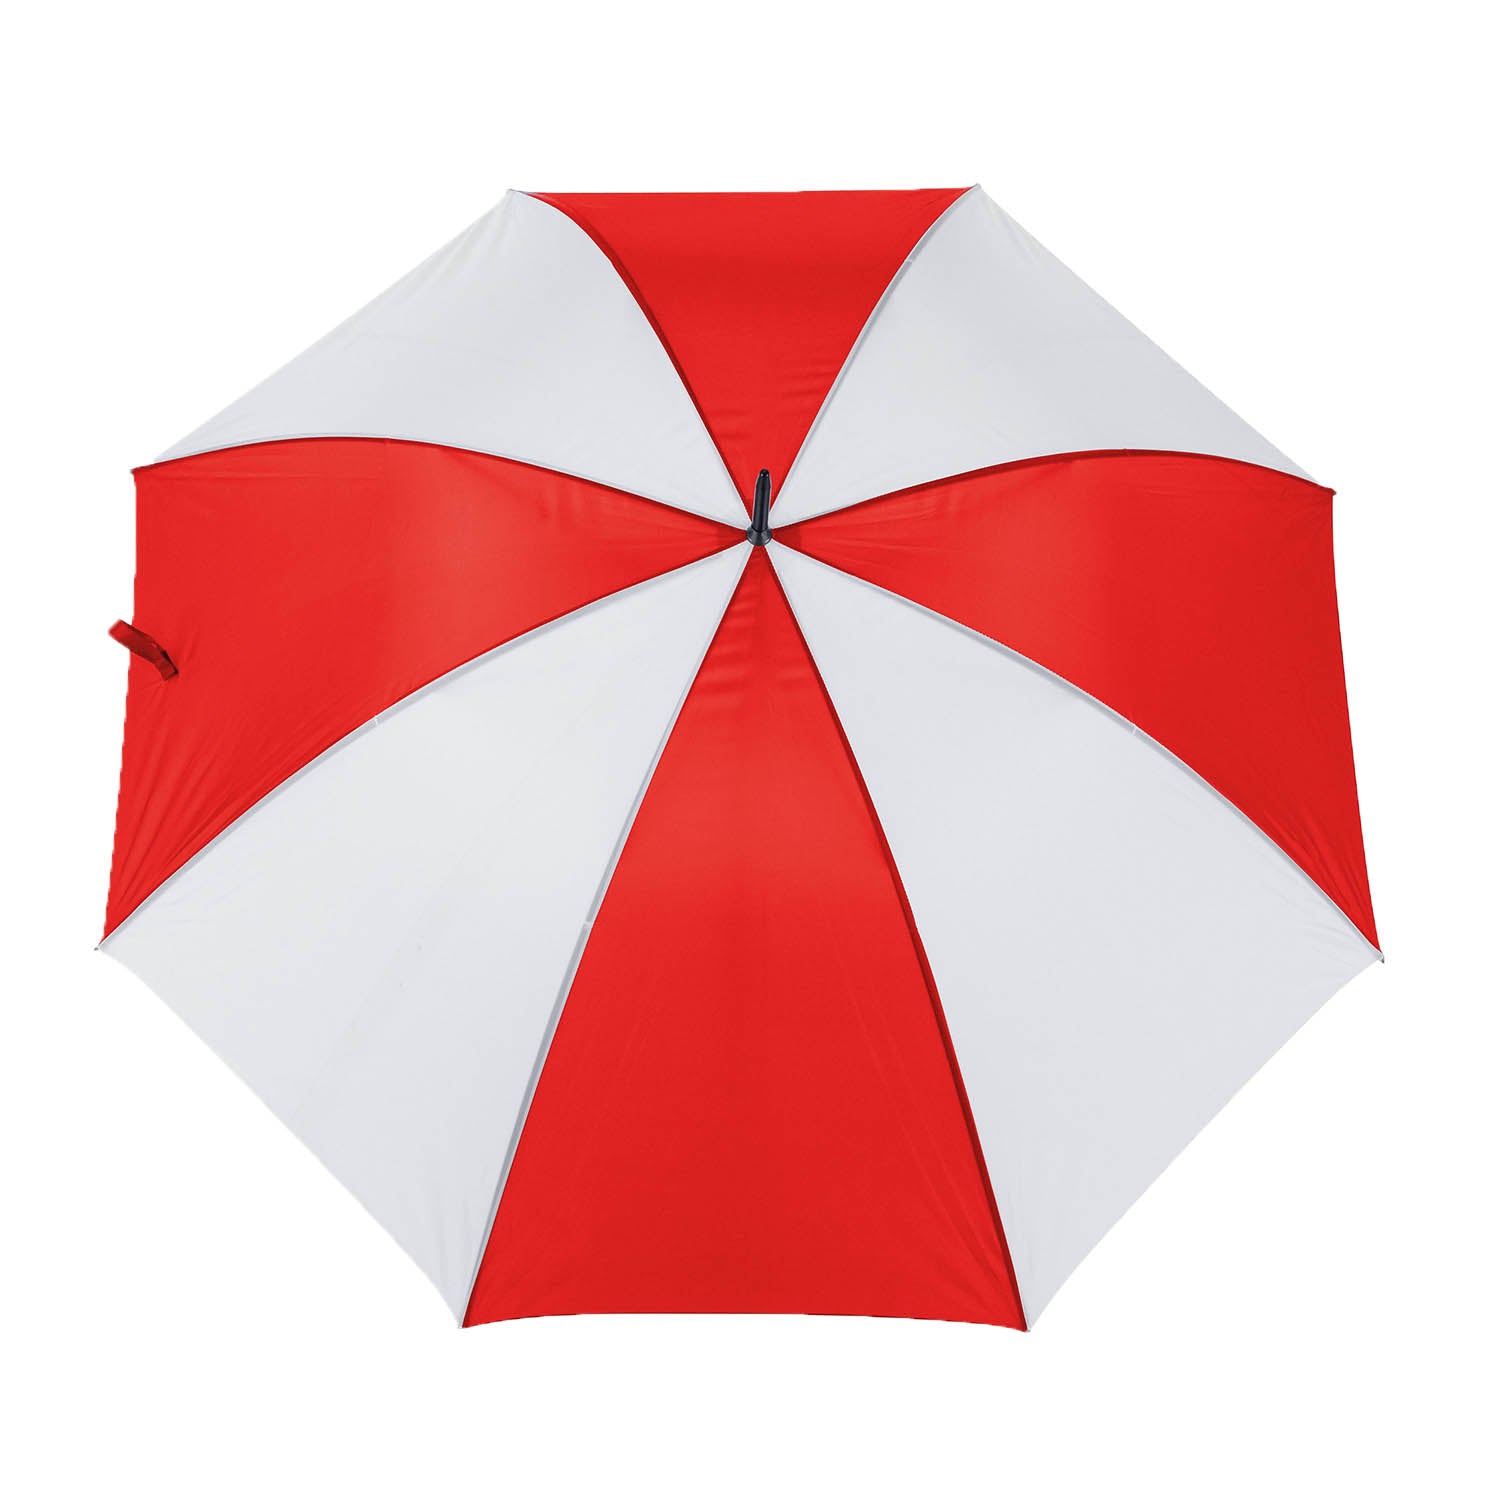 150cm Red Canopy Golf Windproof Large Umbrella